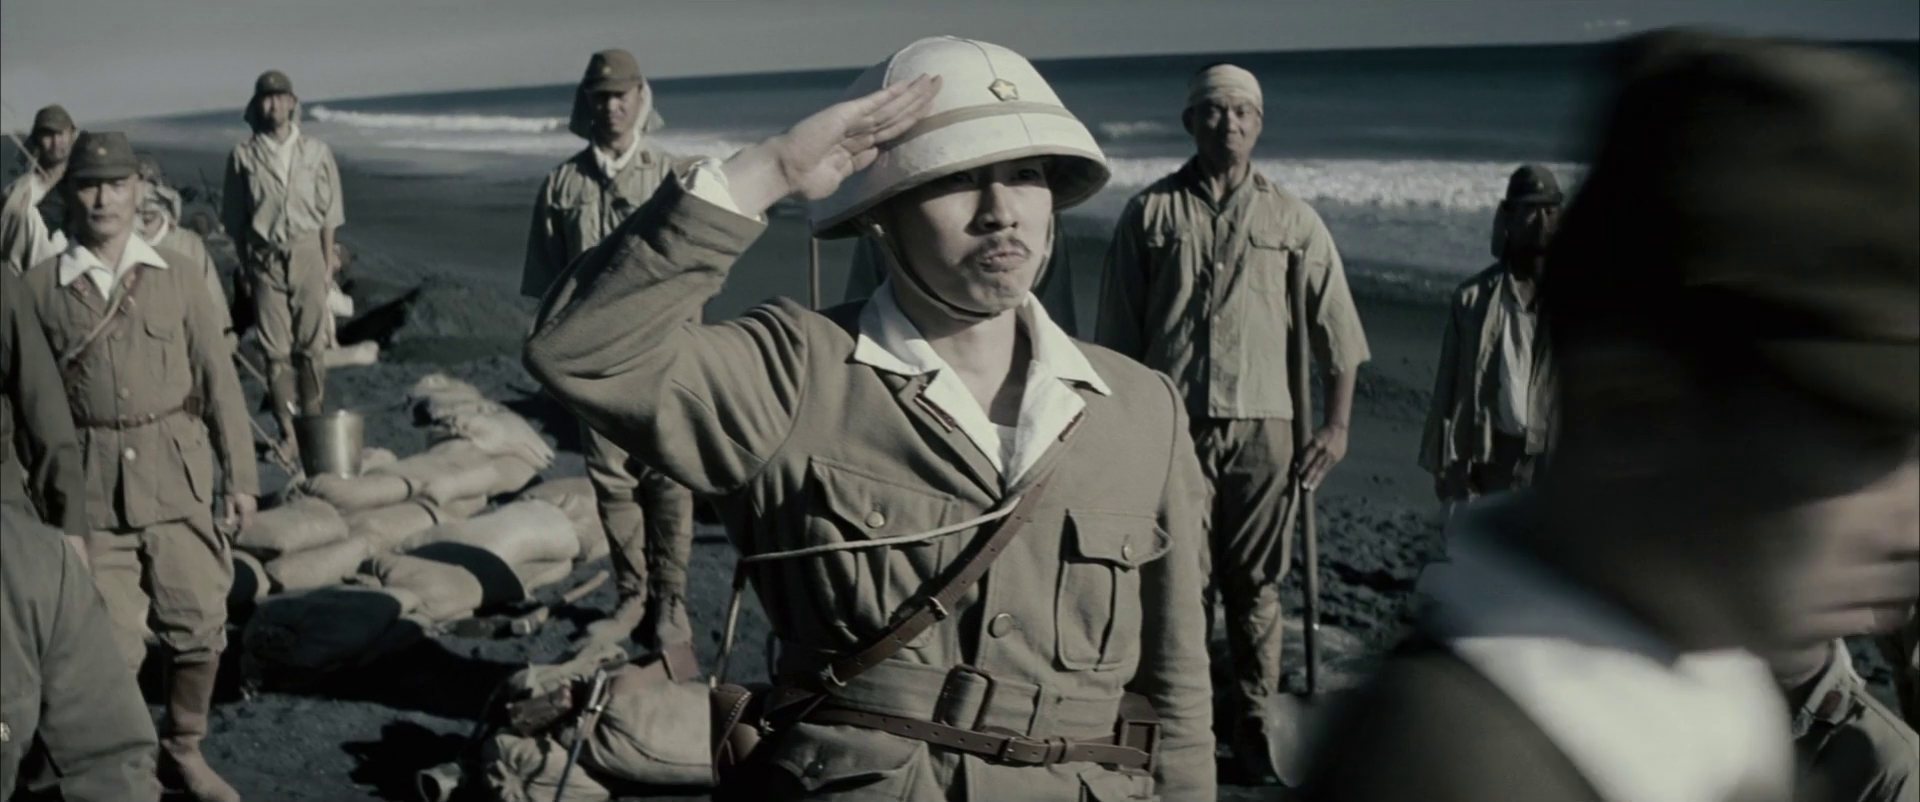 Cartas Desde Iwo Jima (2006) [BDRip/1080p][Esp/Jap Subt][Bélico][6,19GB]         Vlcsnap-2021-09-13-10h13m53s387